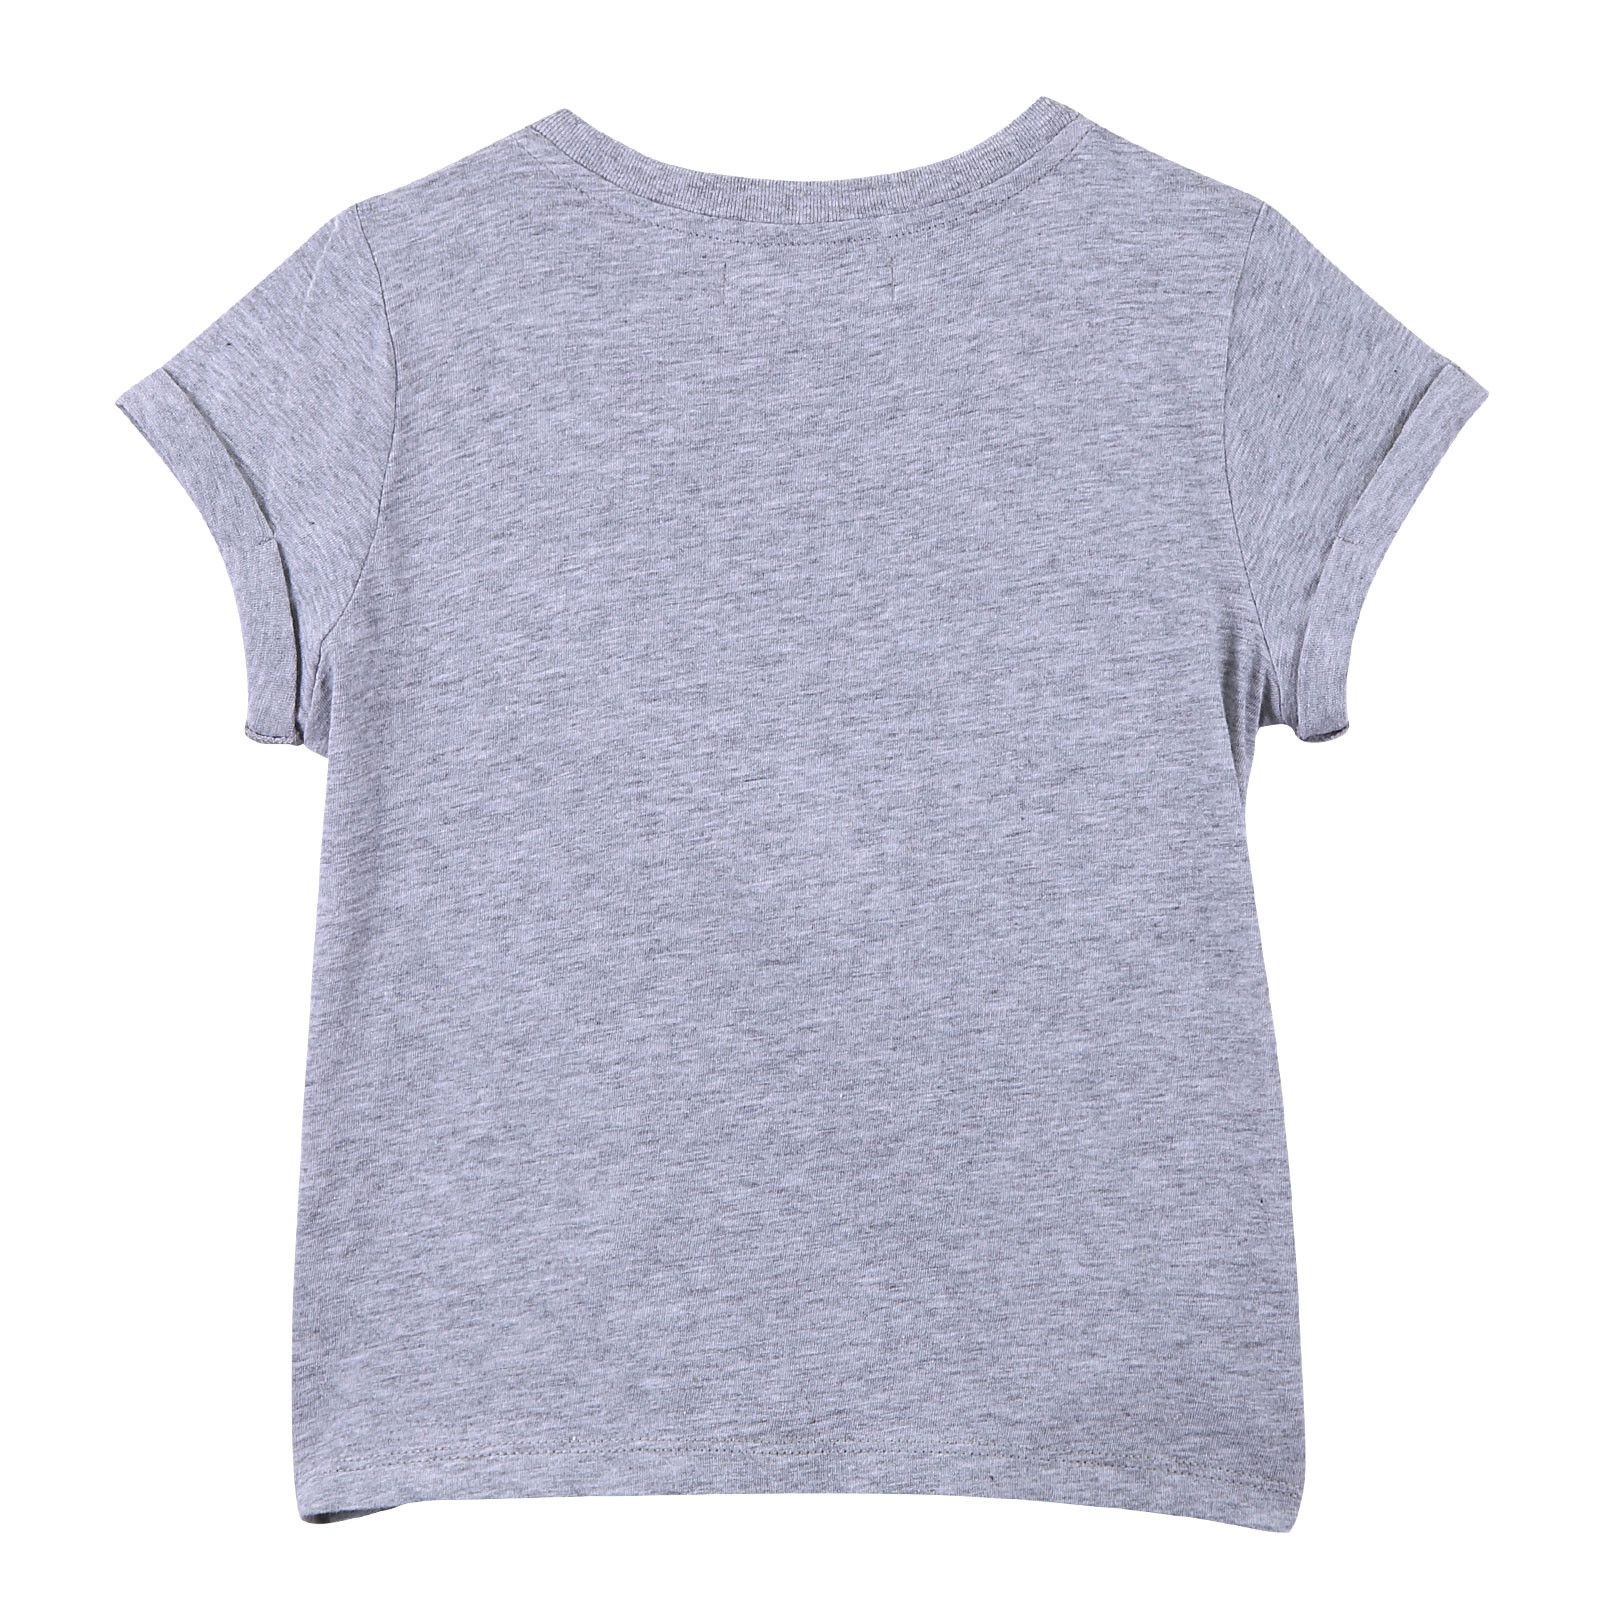 Girls Grey Giraffe Printed Cotton T-Shirt - CÉMAROSE | Children's Fashion Store - 2